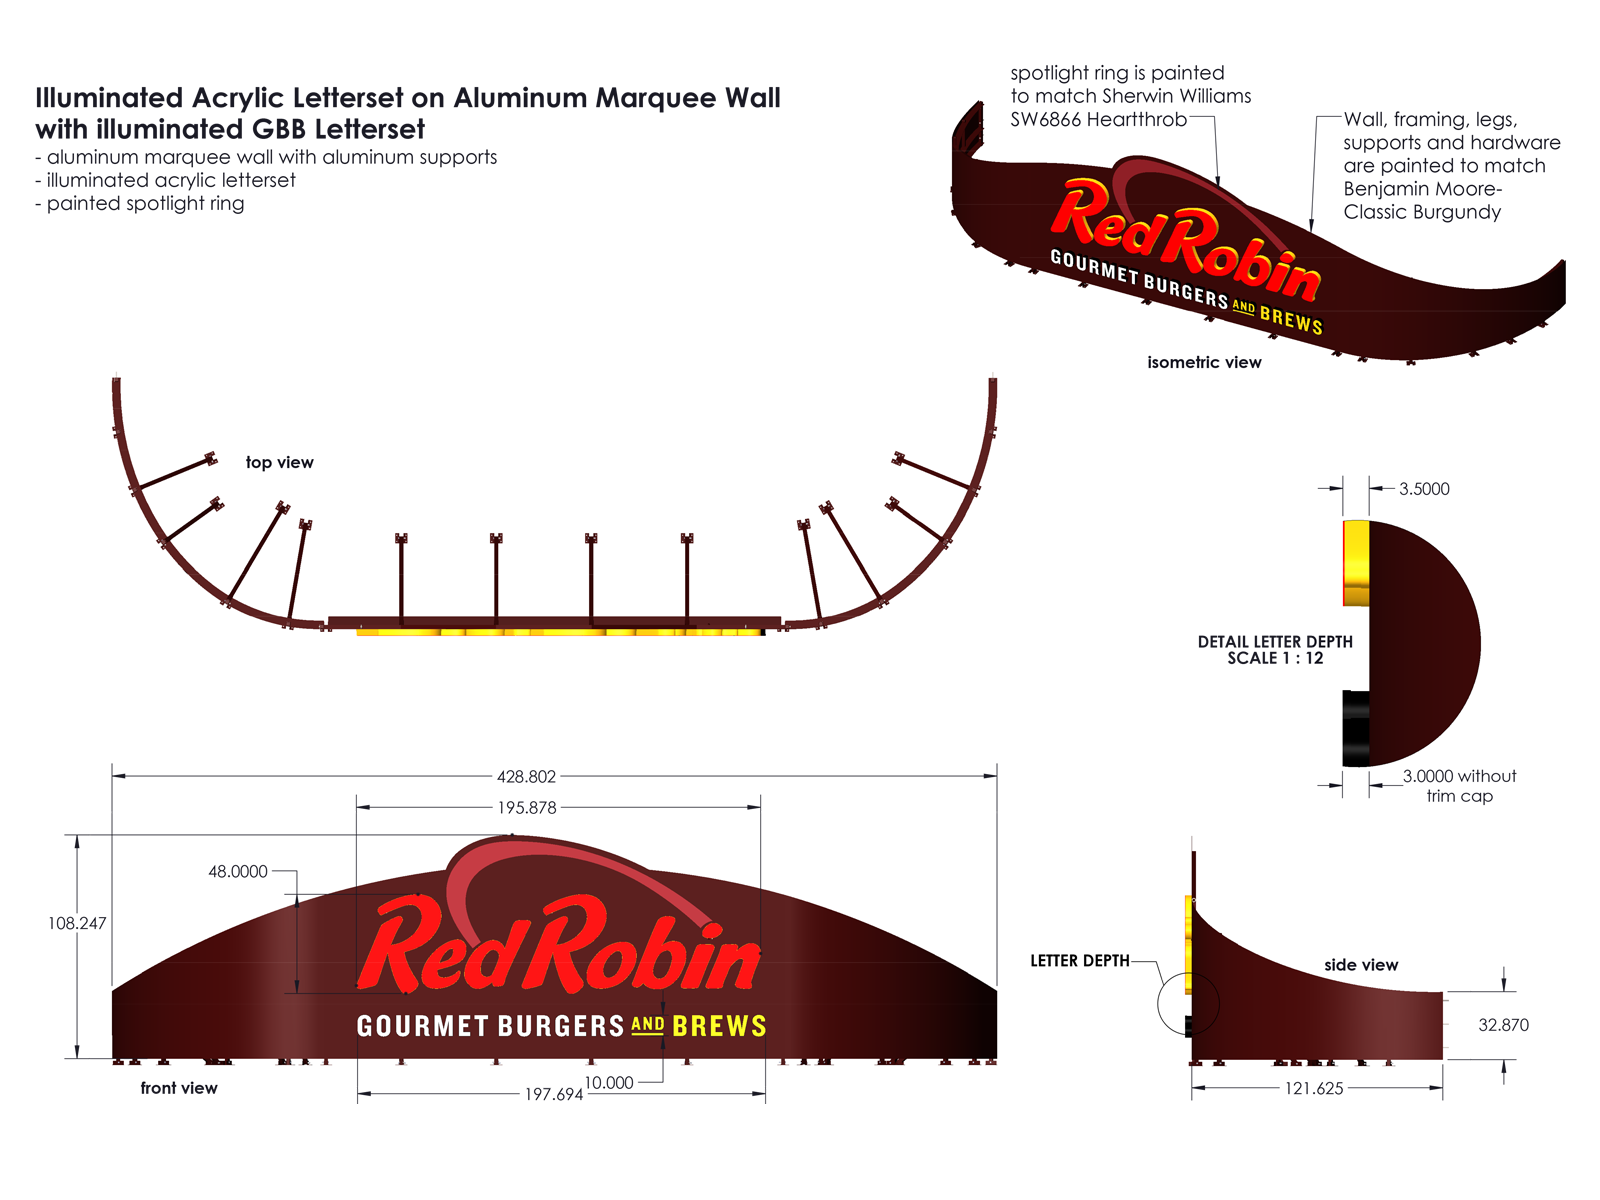 Red Robin acrylic sign design schematics